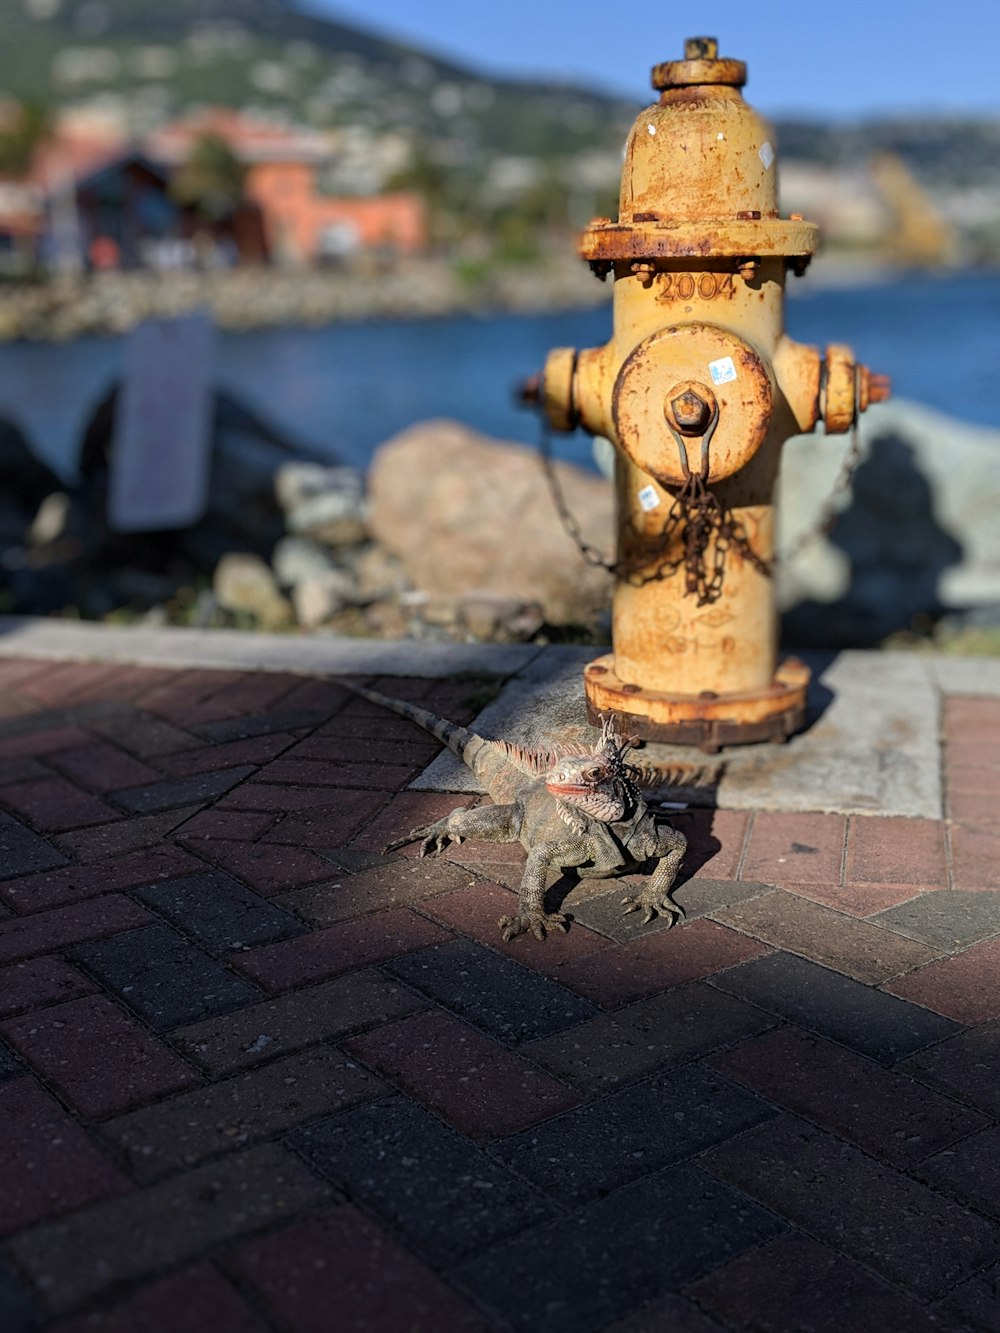 lizard next to fire hydrant